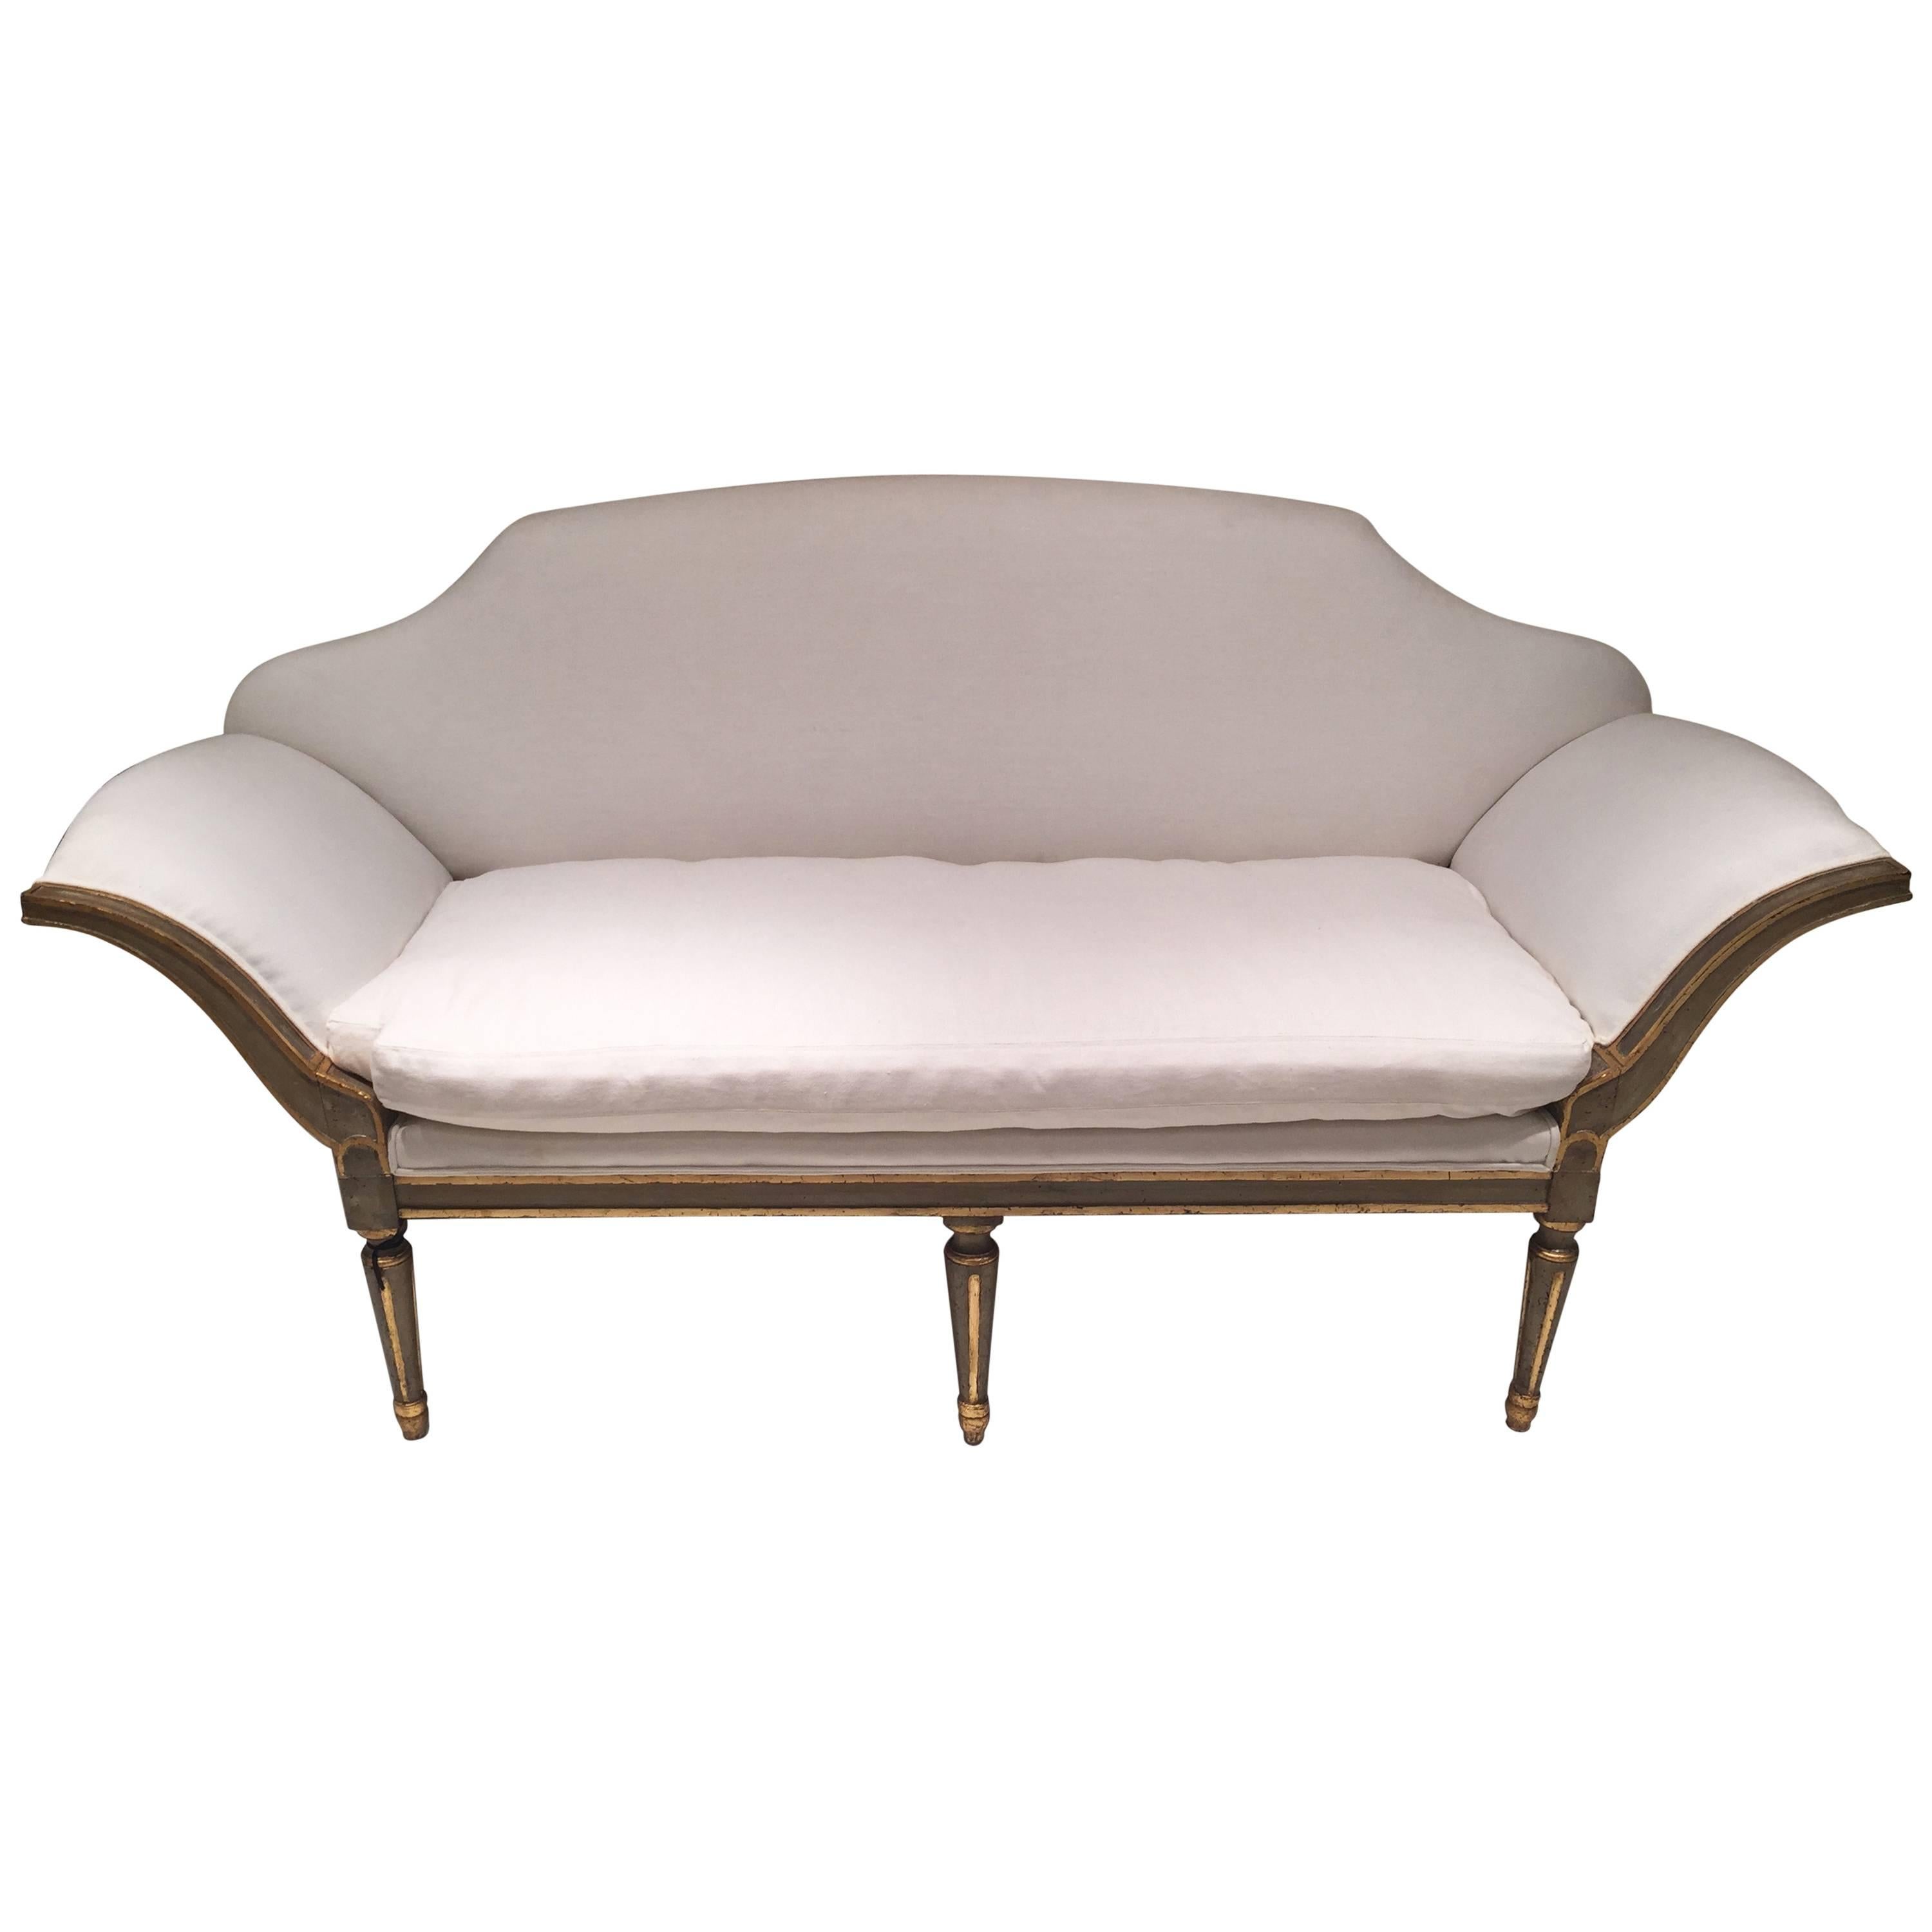 Italian Painted Settee Upholstered in White Linen For Sale